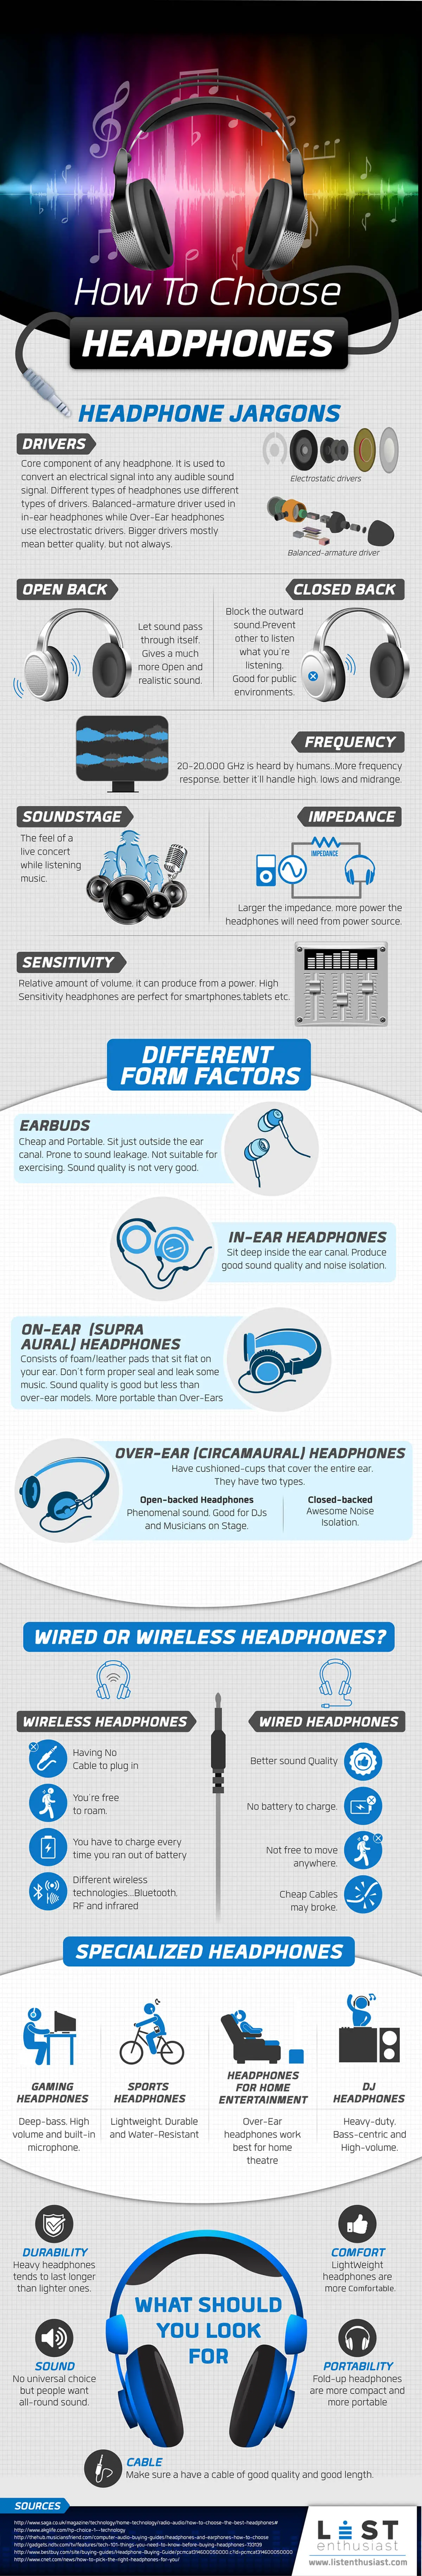 How to choose headphones - Infographic